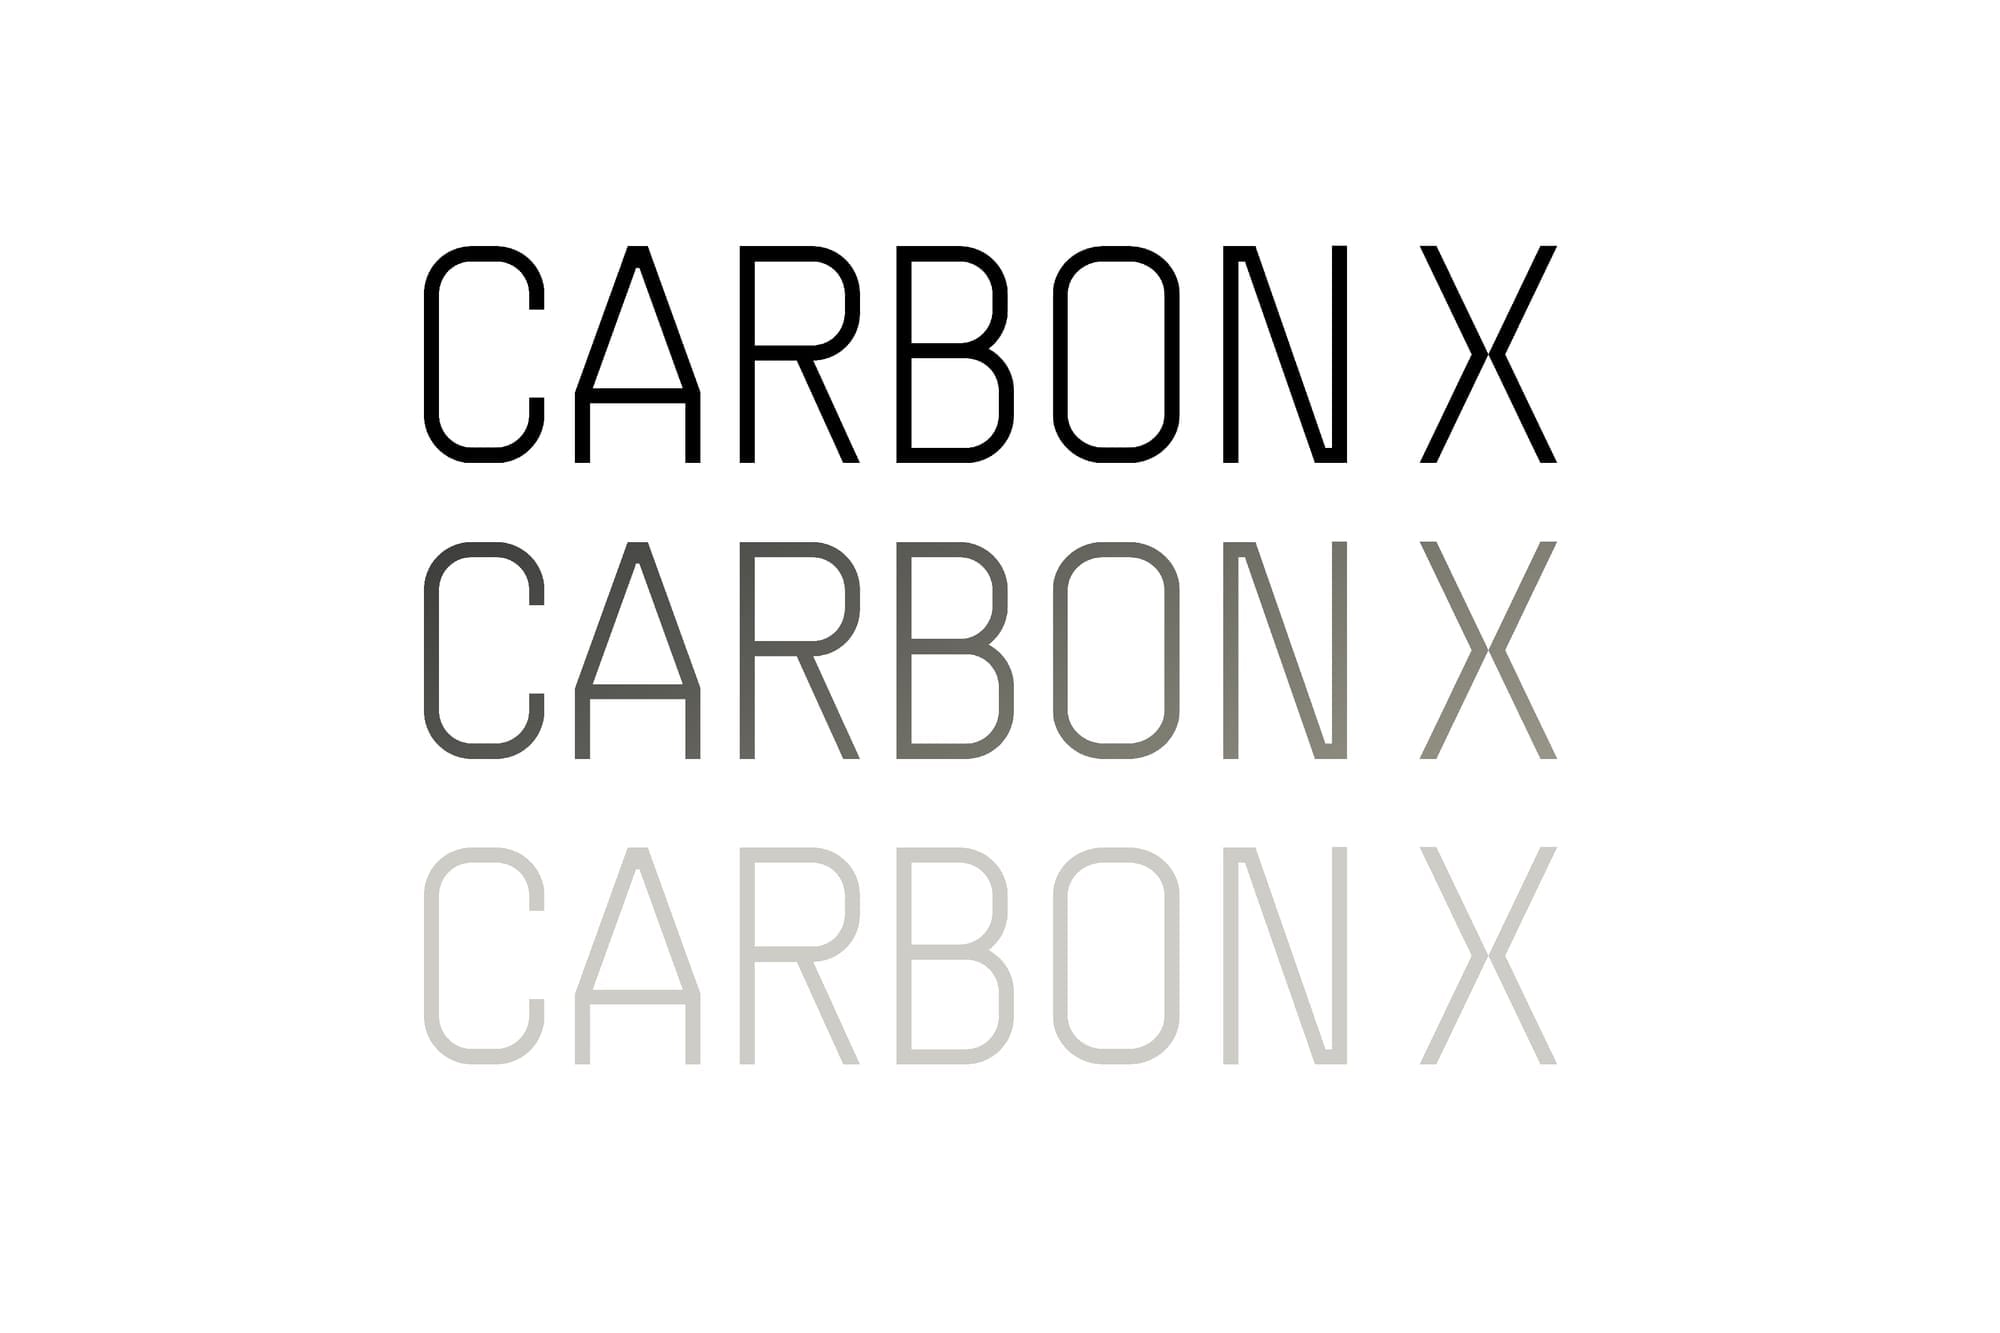 233110-CASESTUDY-carbonx_CARBON X-7.jpg